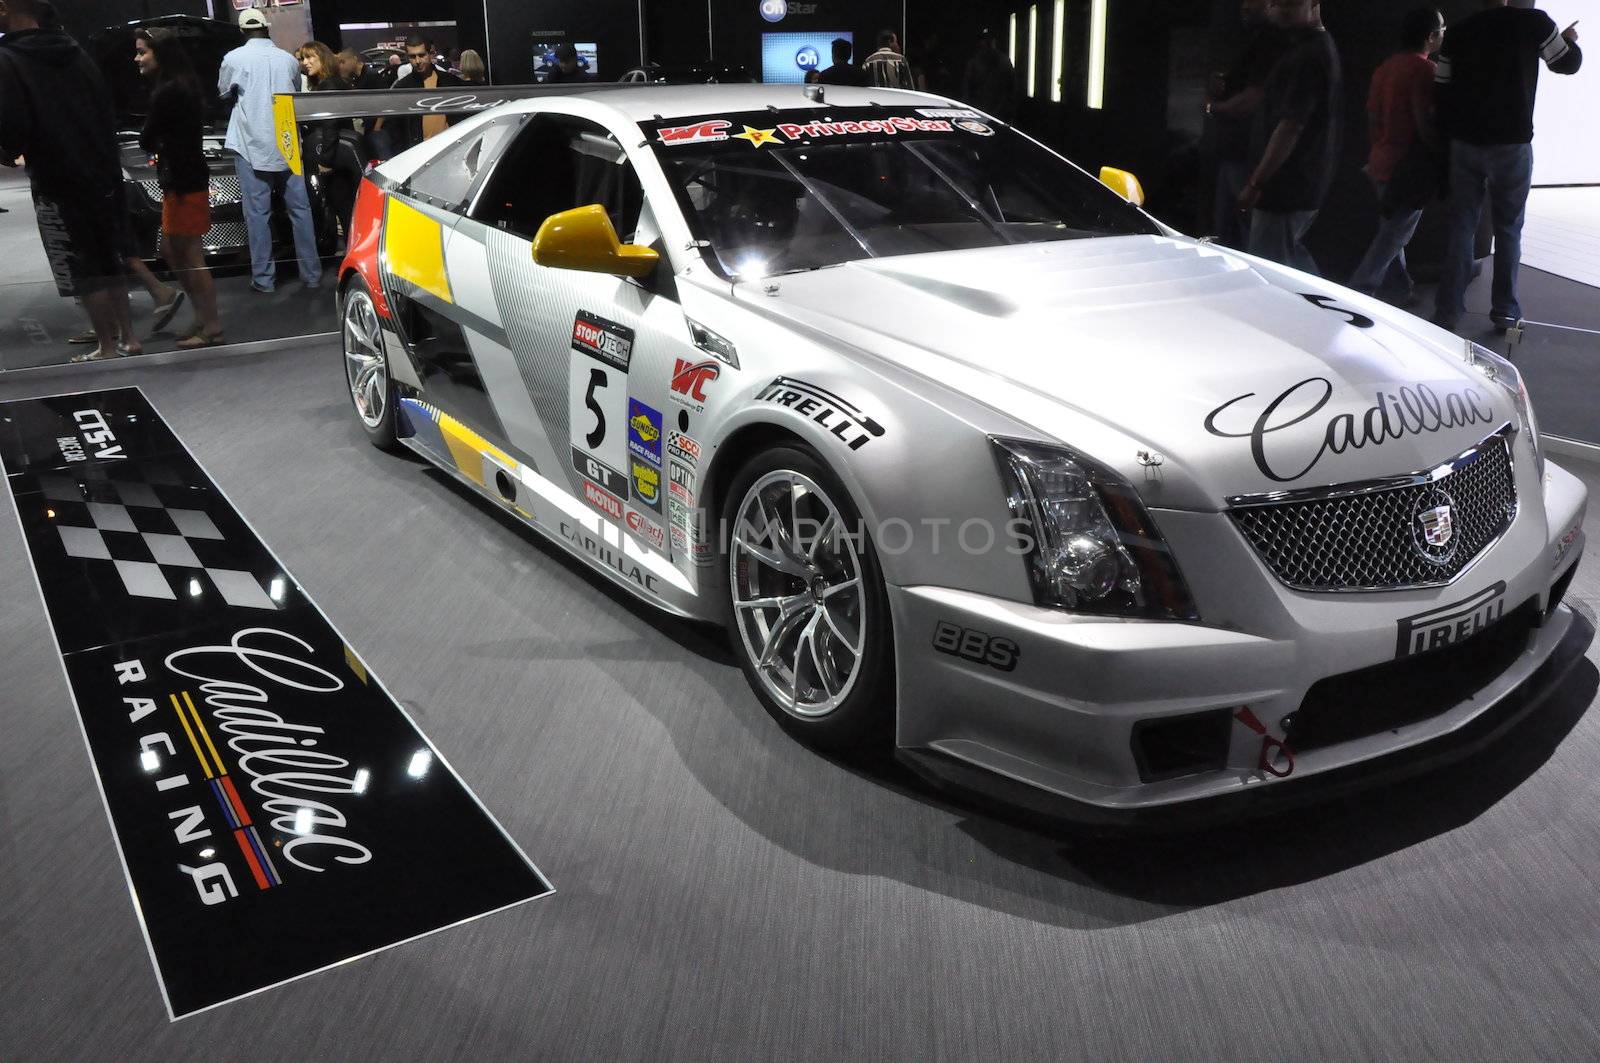 Cadillac CTS-V Race Car at Auto Show